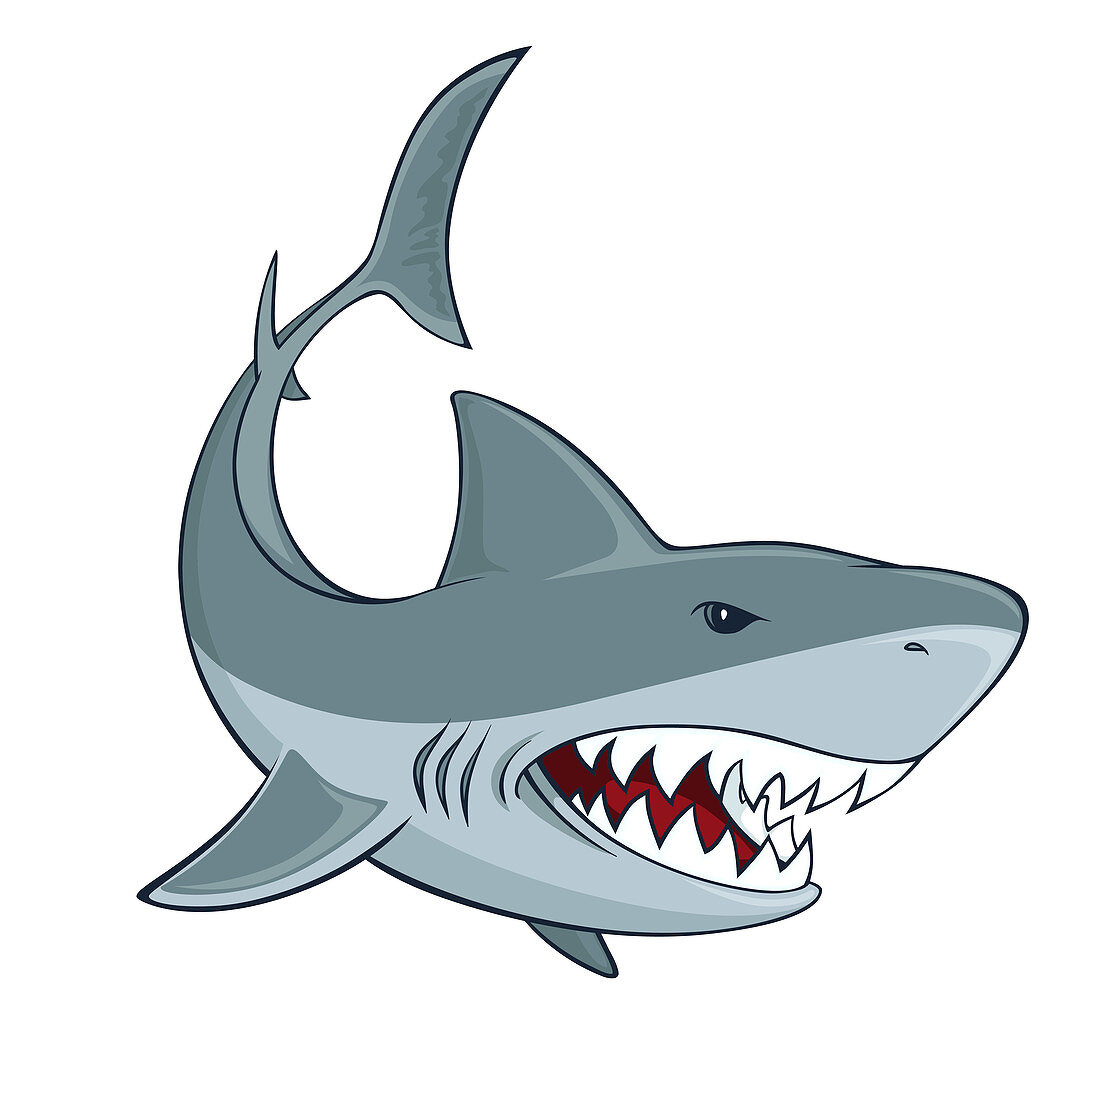 Angry shark, illustration